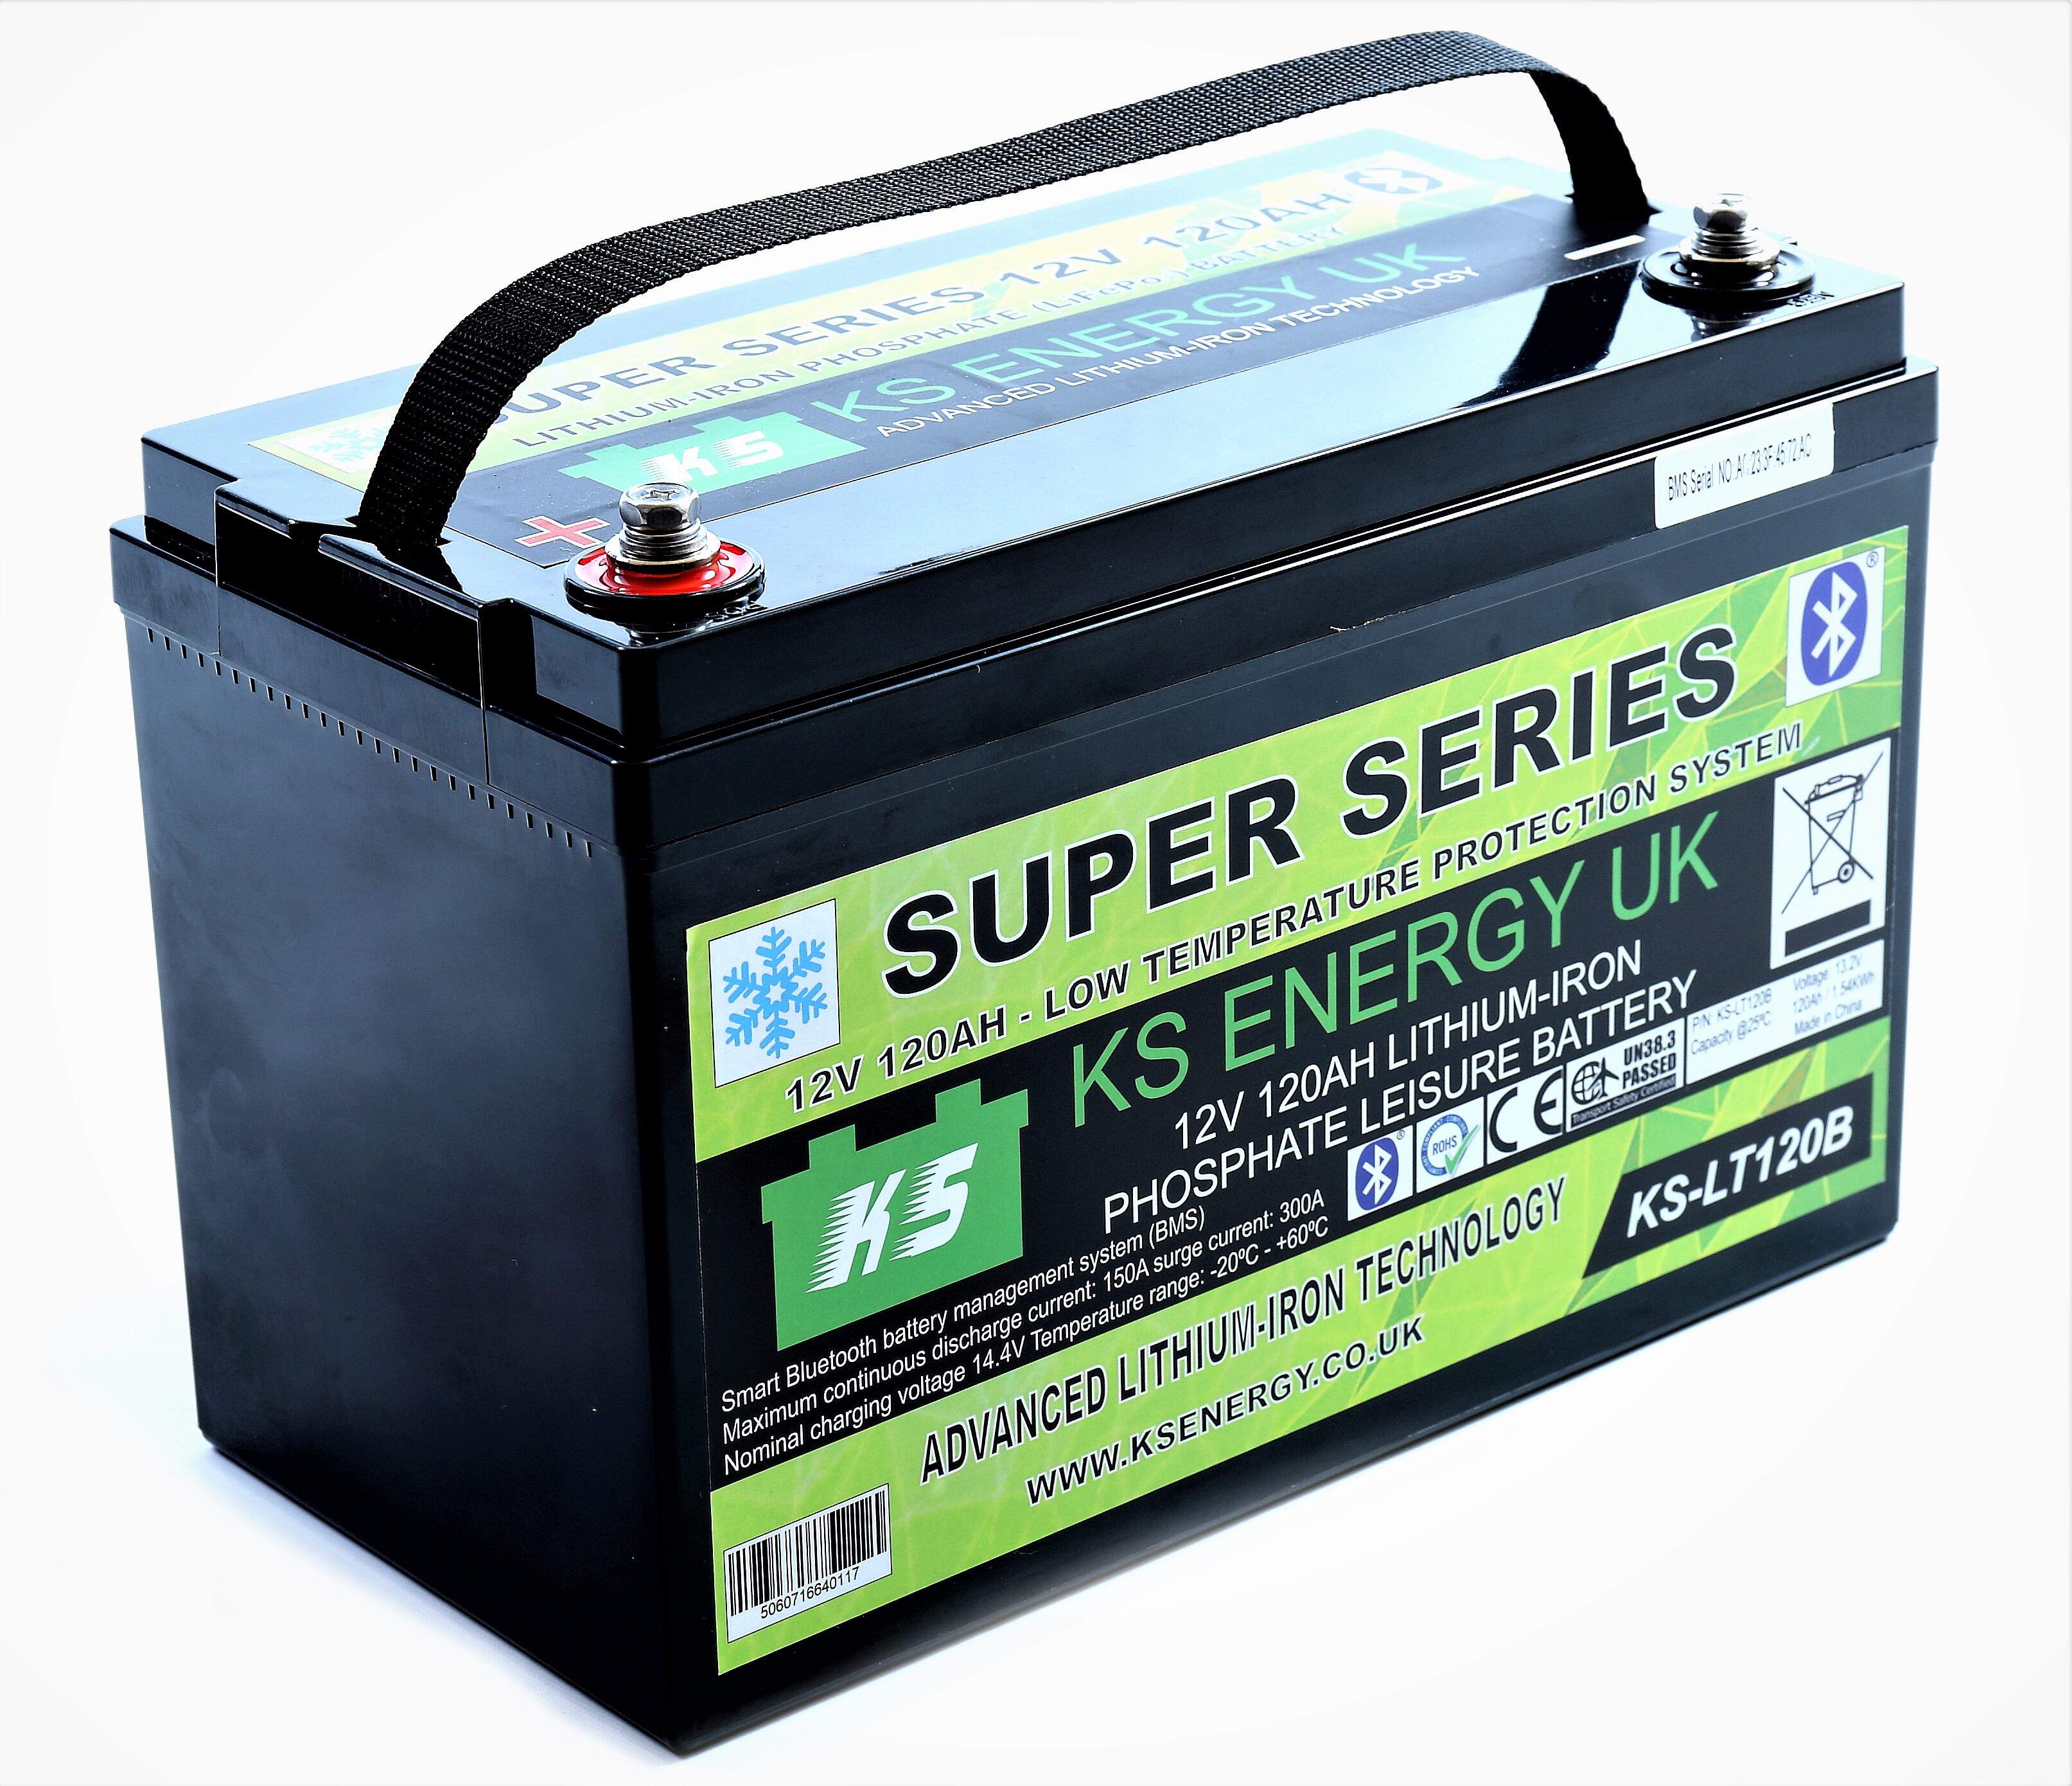 3): KS-LT120B 12v 120AH Super Series Bluetooth High Power lithium leisure battery